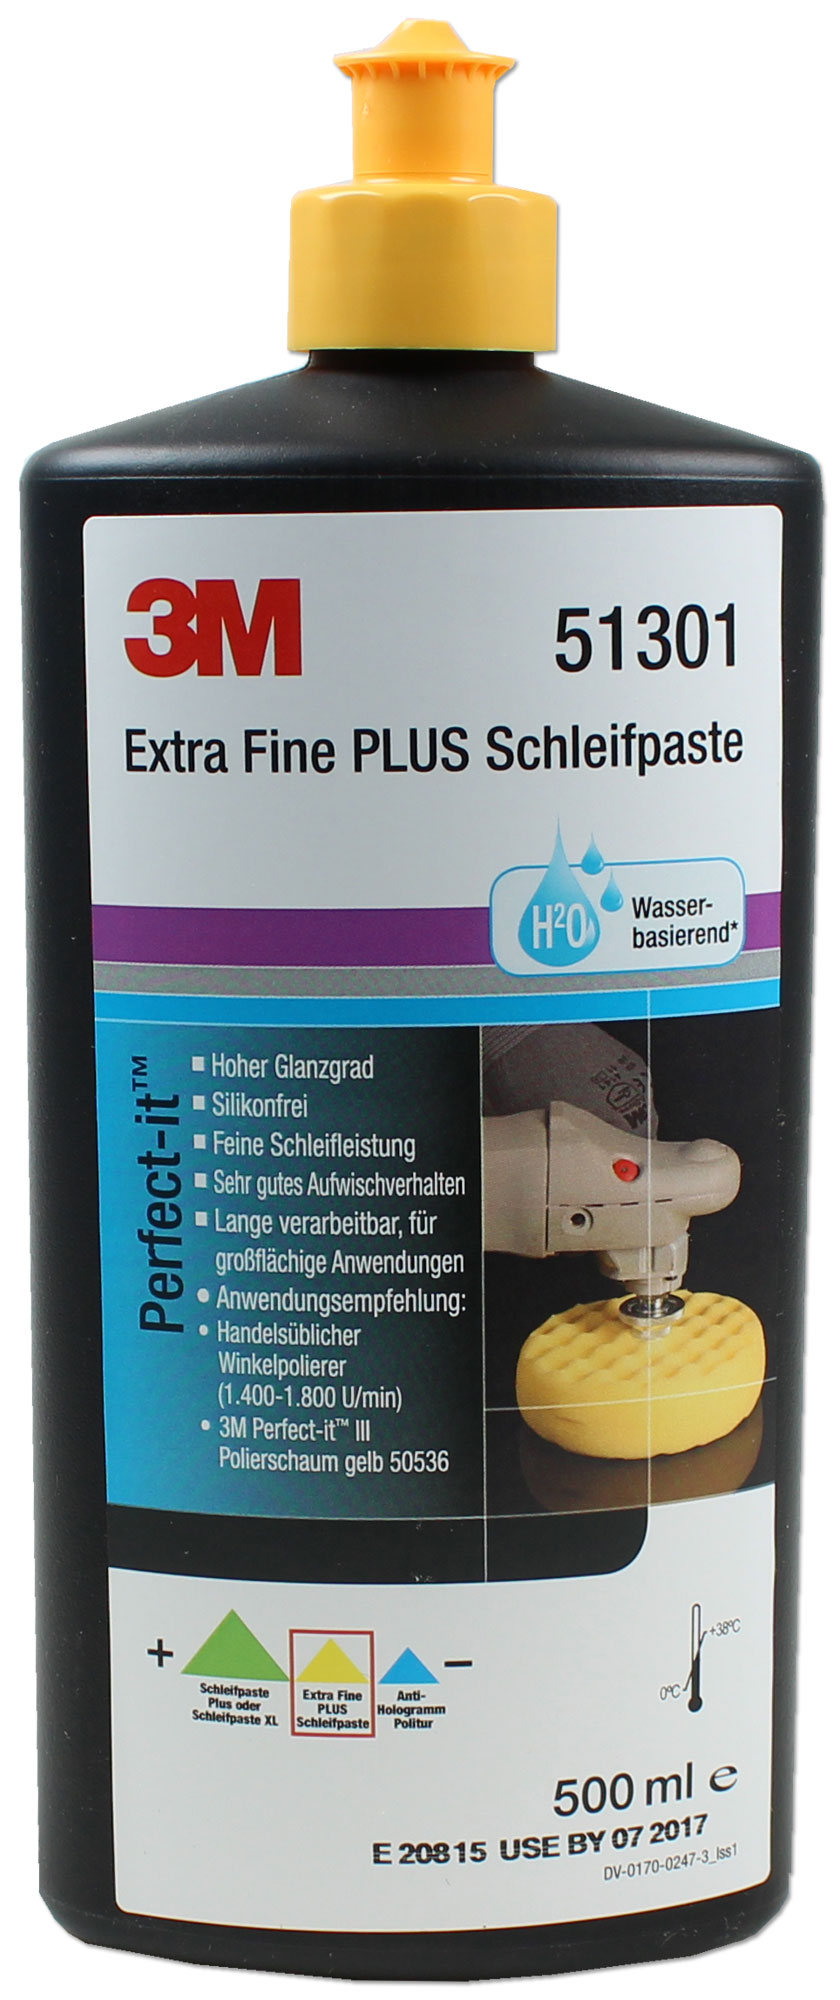 3M Perfect-it III Extra Fine Schleifpaste